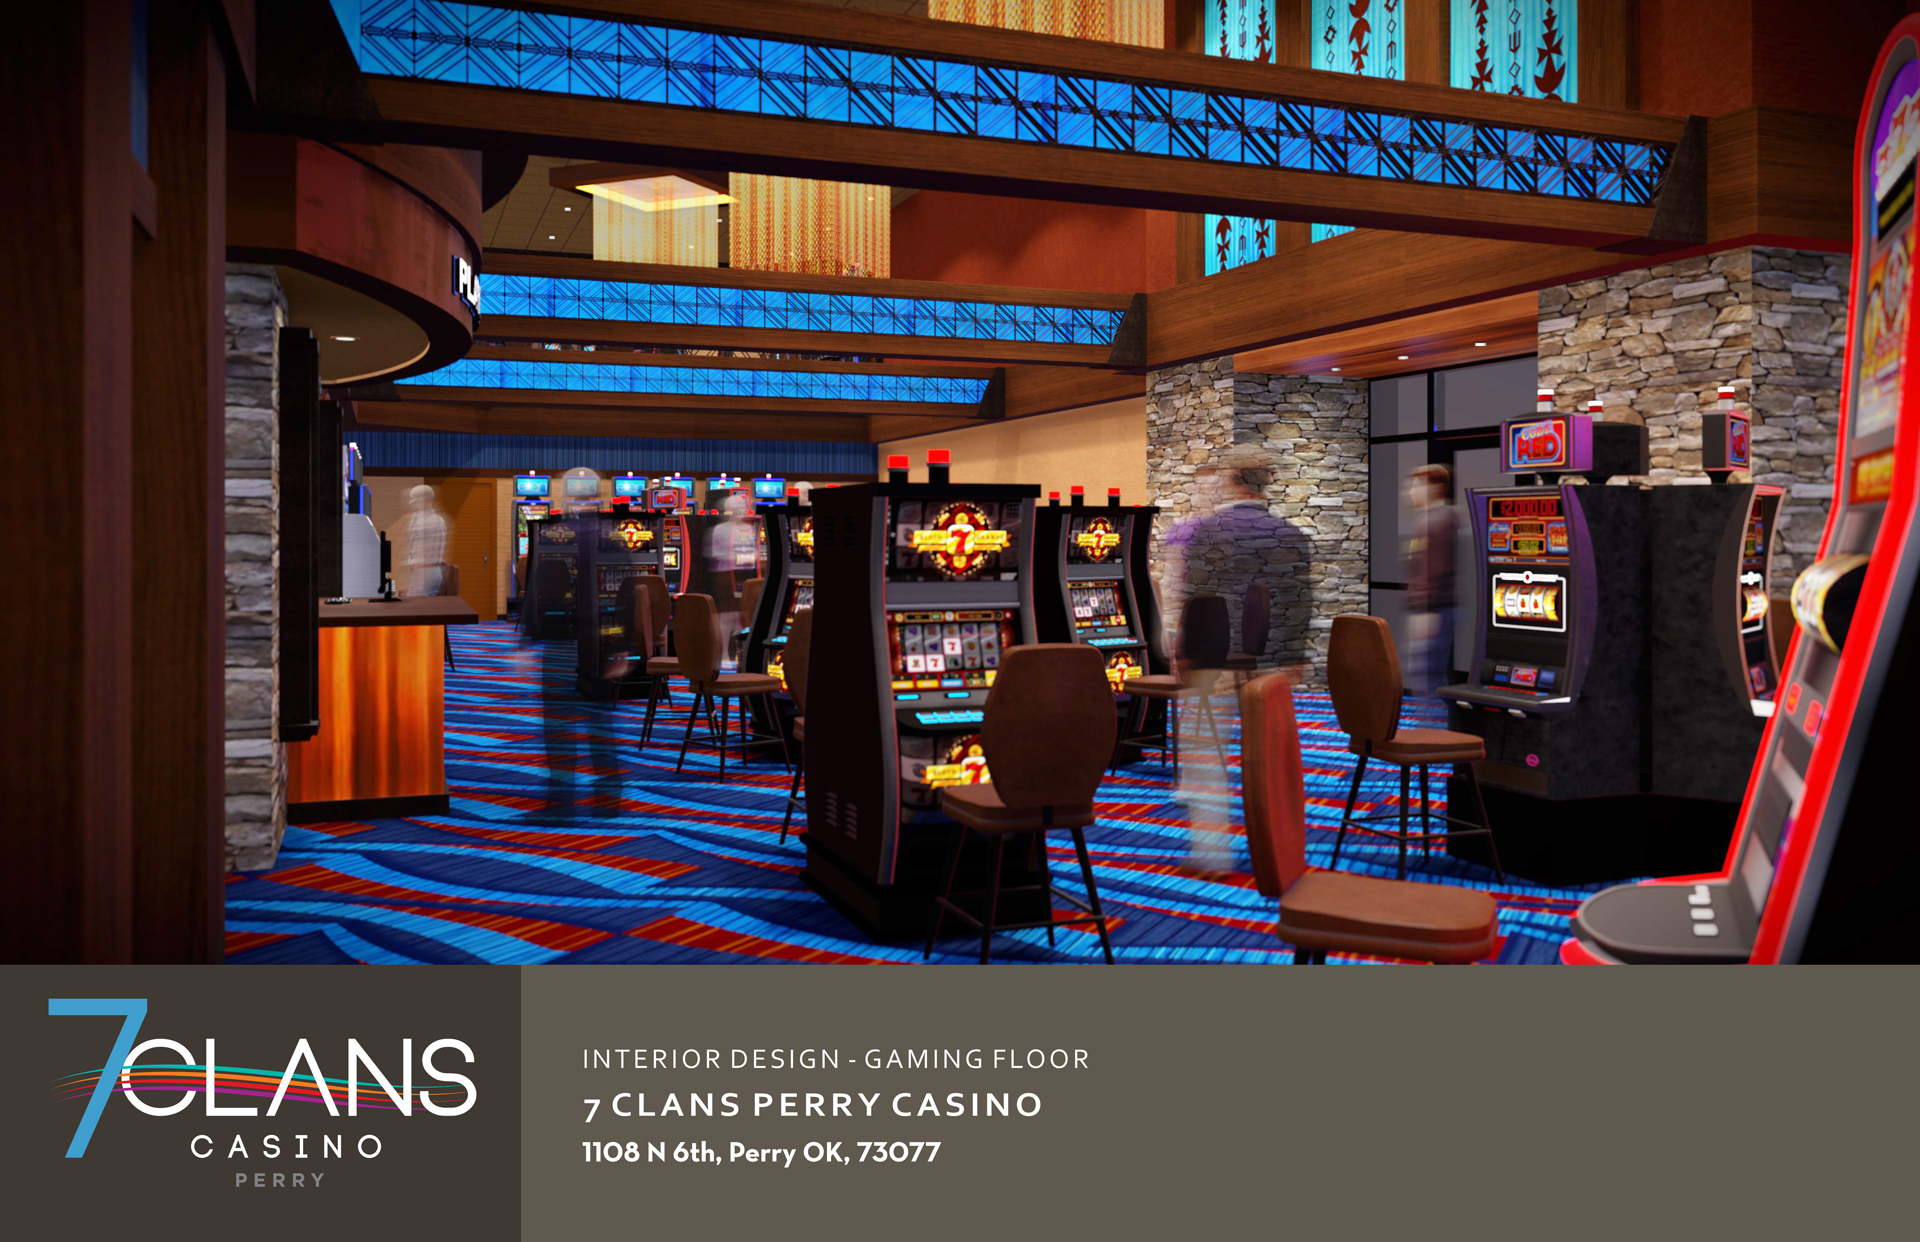 7 clans casino resort